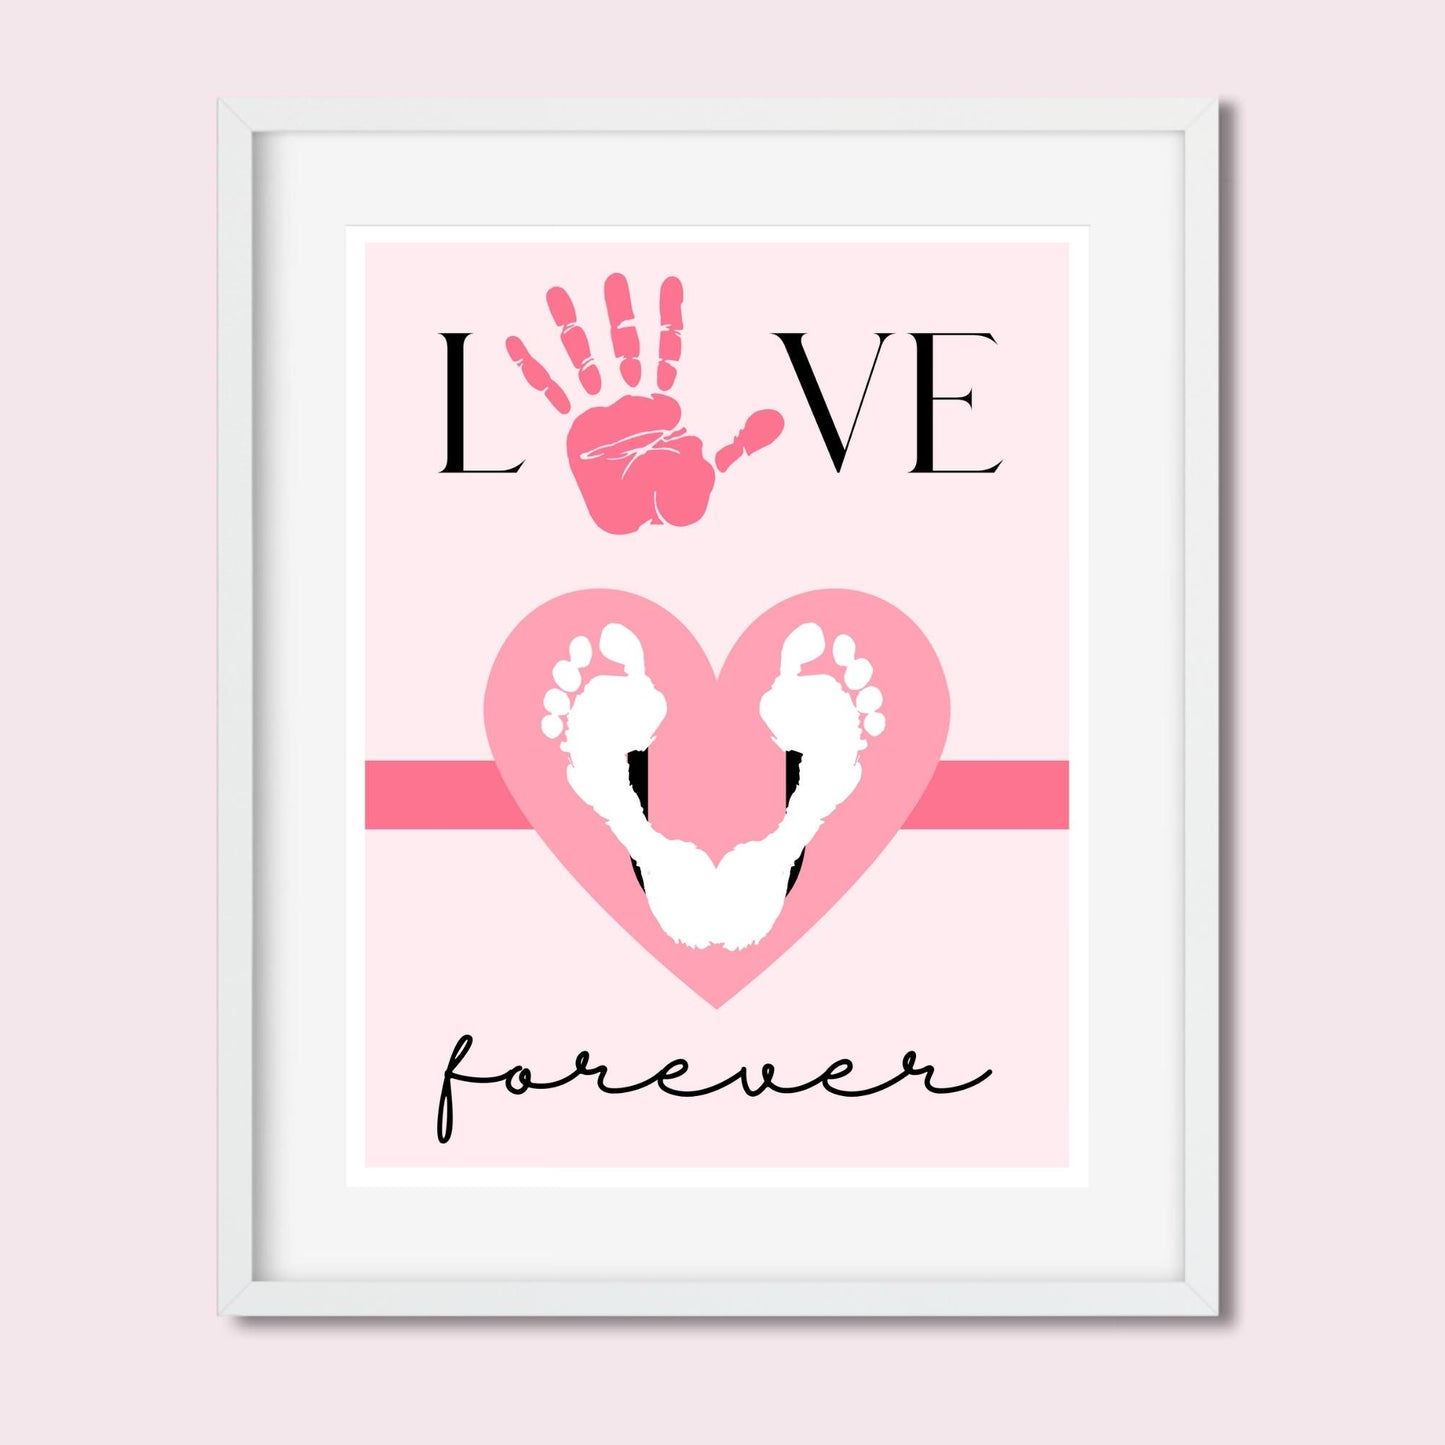 LOVE Baby Handprint & Footprint Kit – Printables by The Craft-at